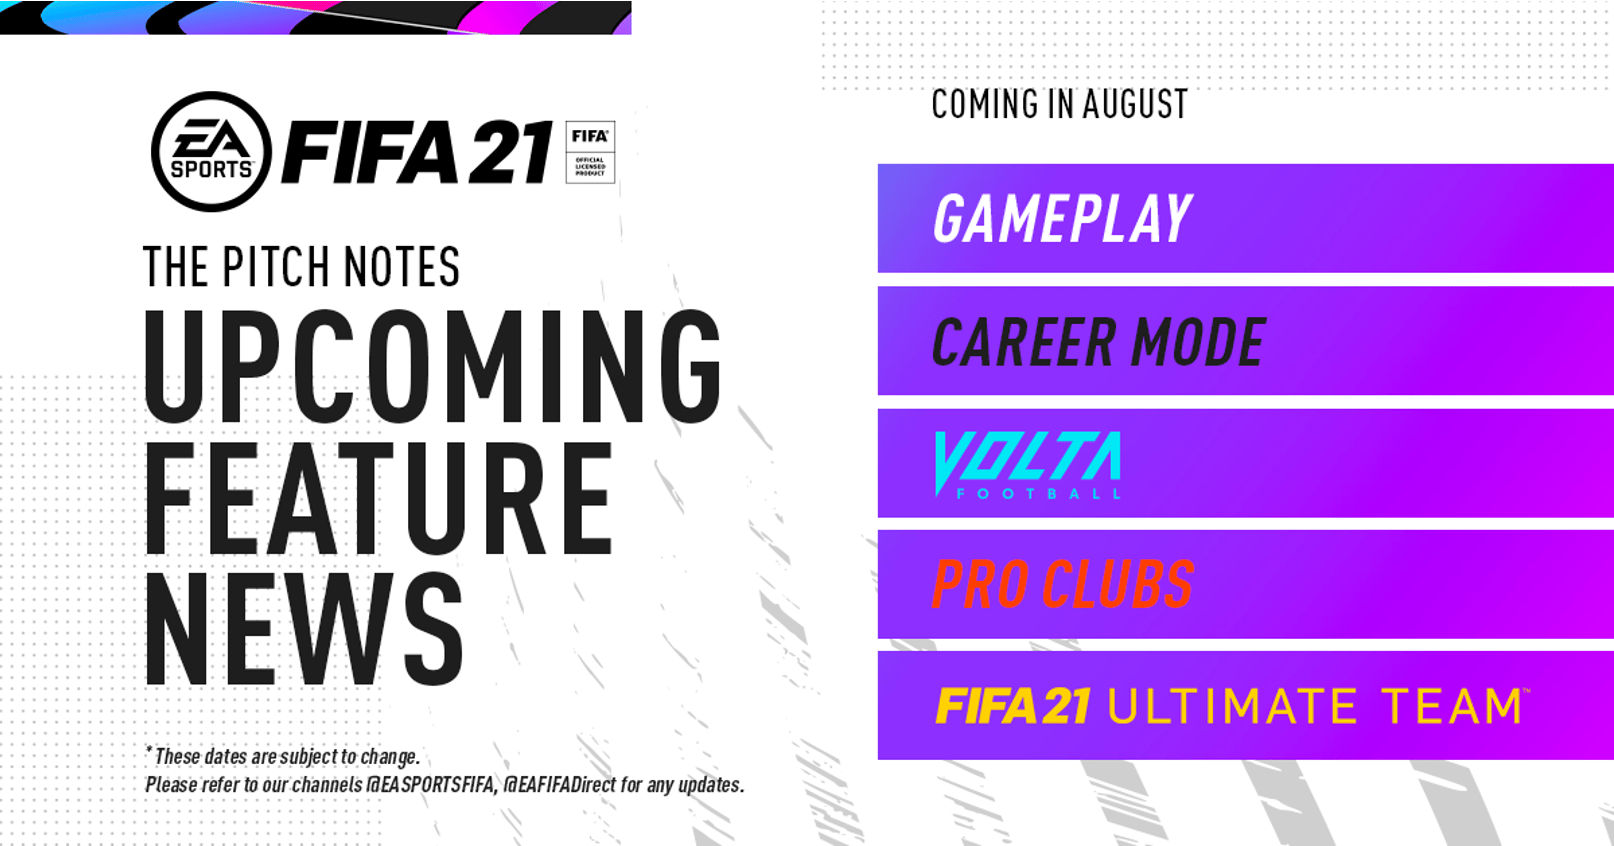 FIFA 21's content schedule